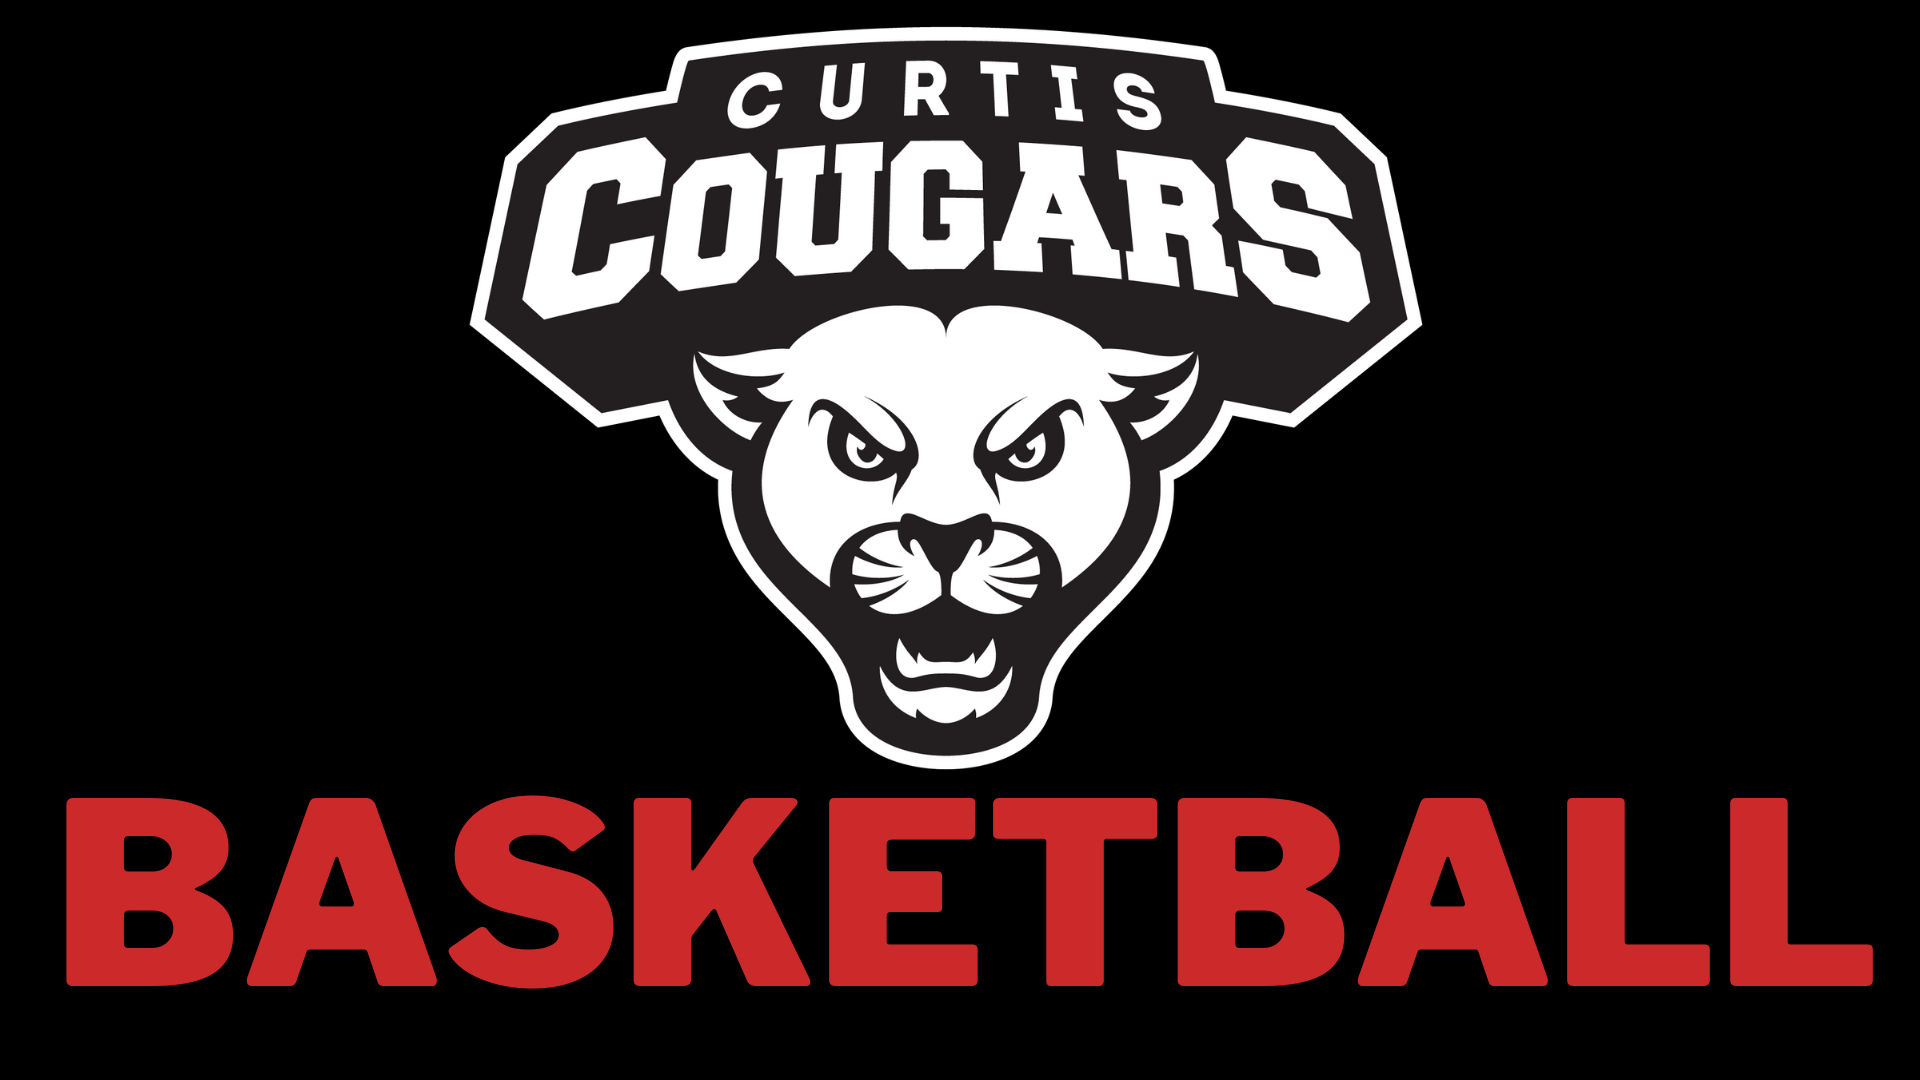 Curtis Cougars Basketball